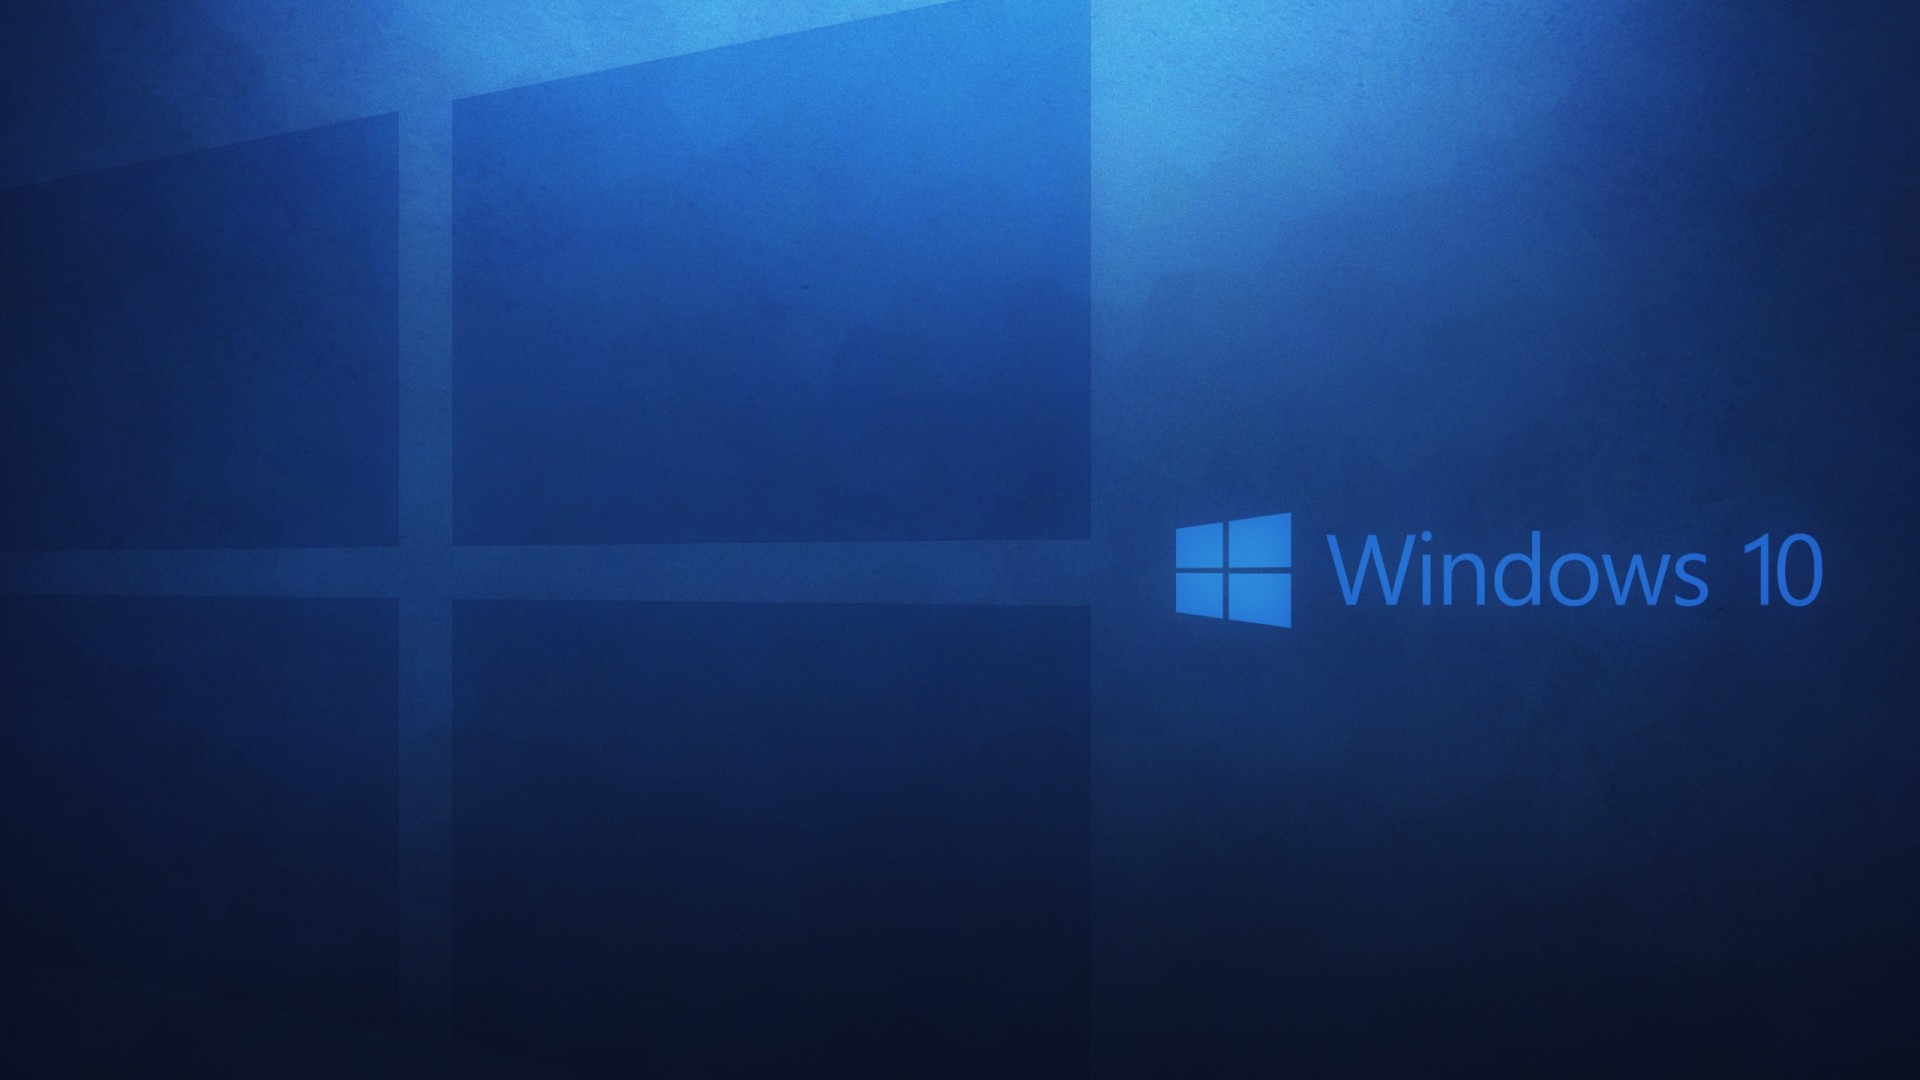 1920x1080 HD Background Windows 10 Wallpaper Microsoft Operating System Blue .